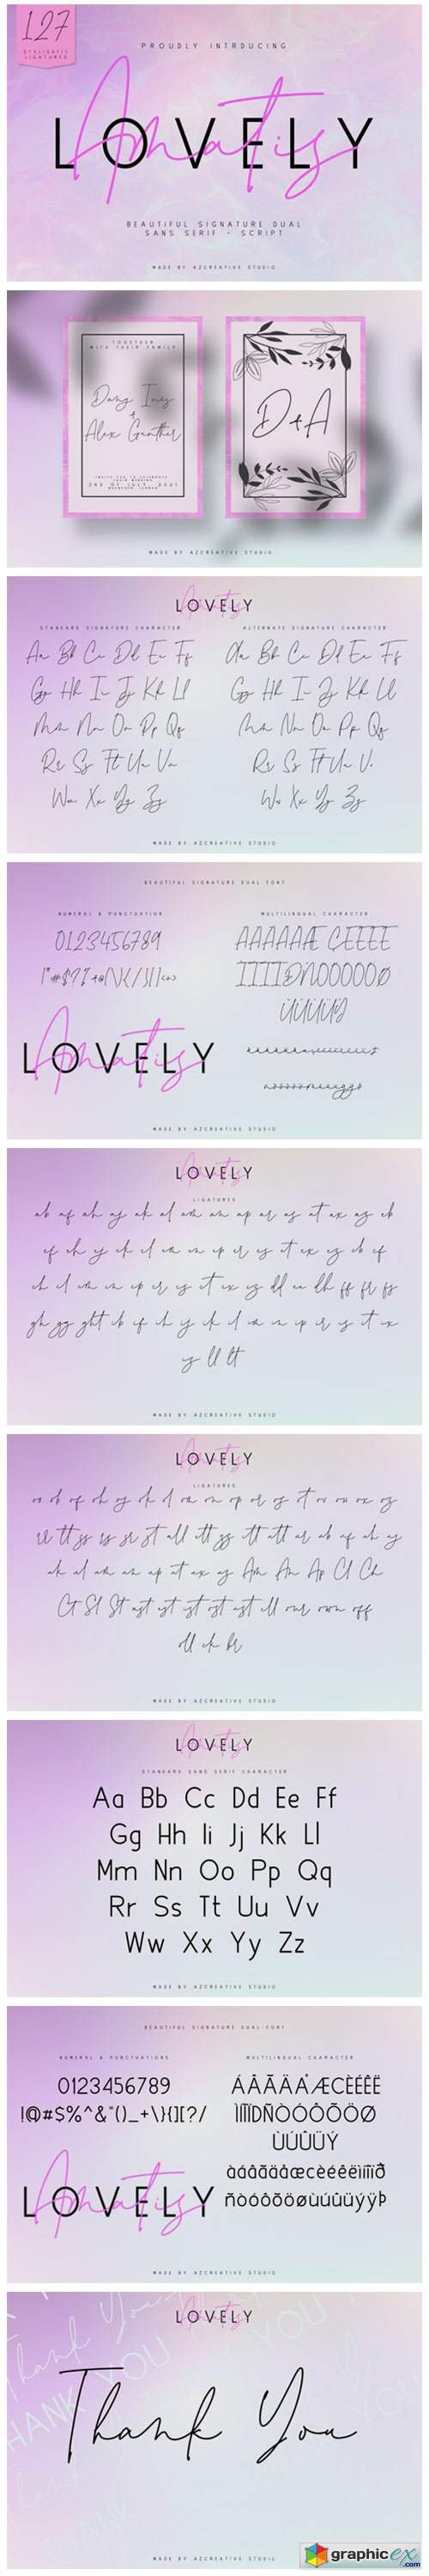  Lovely Amatis Font 